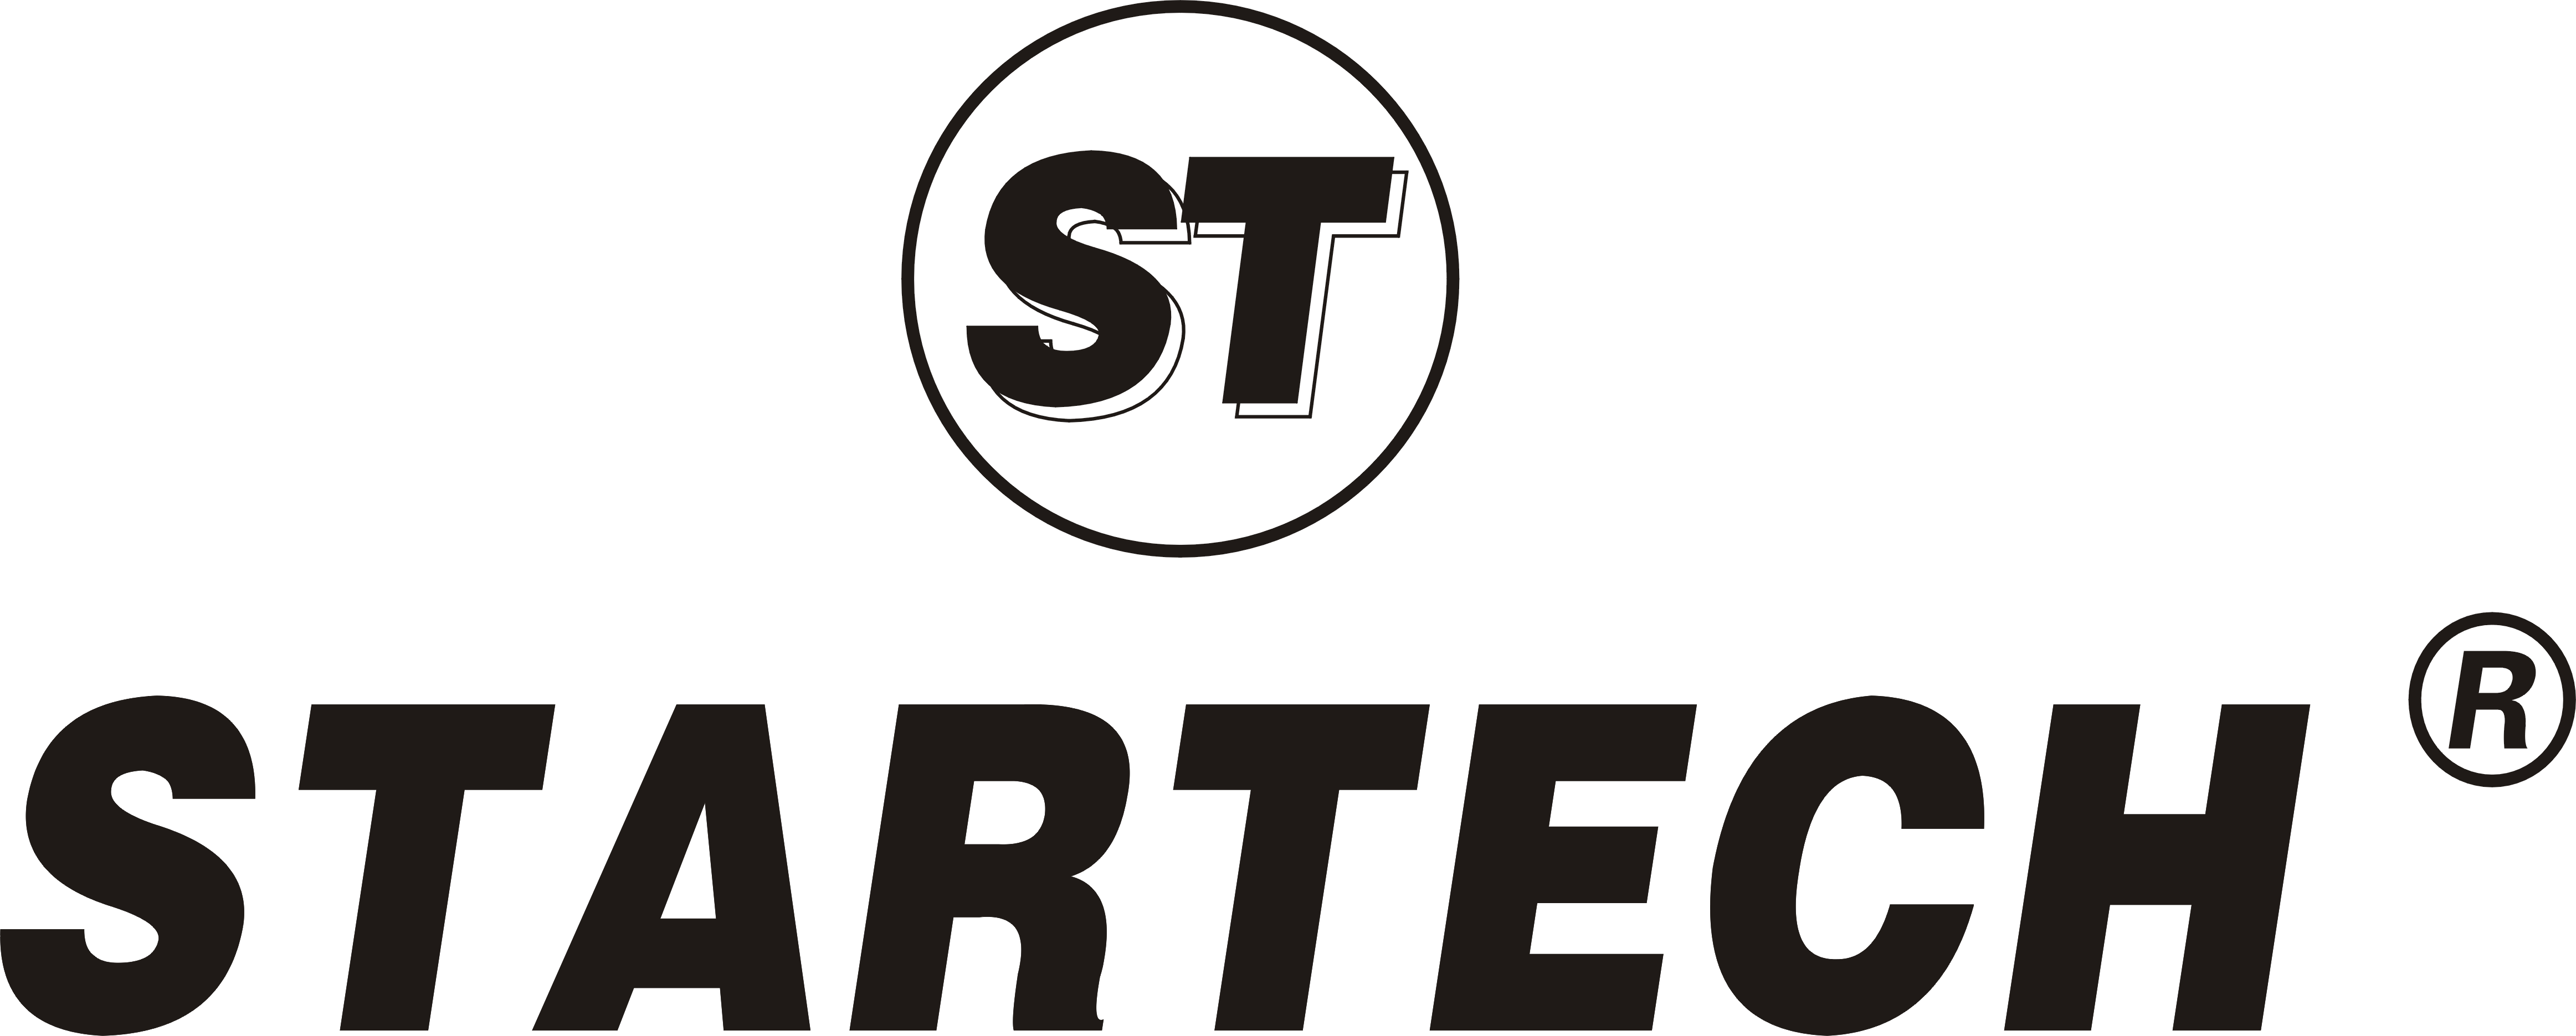 StarTech Logo - Staretch logo.png